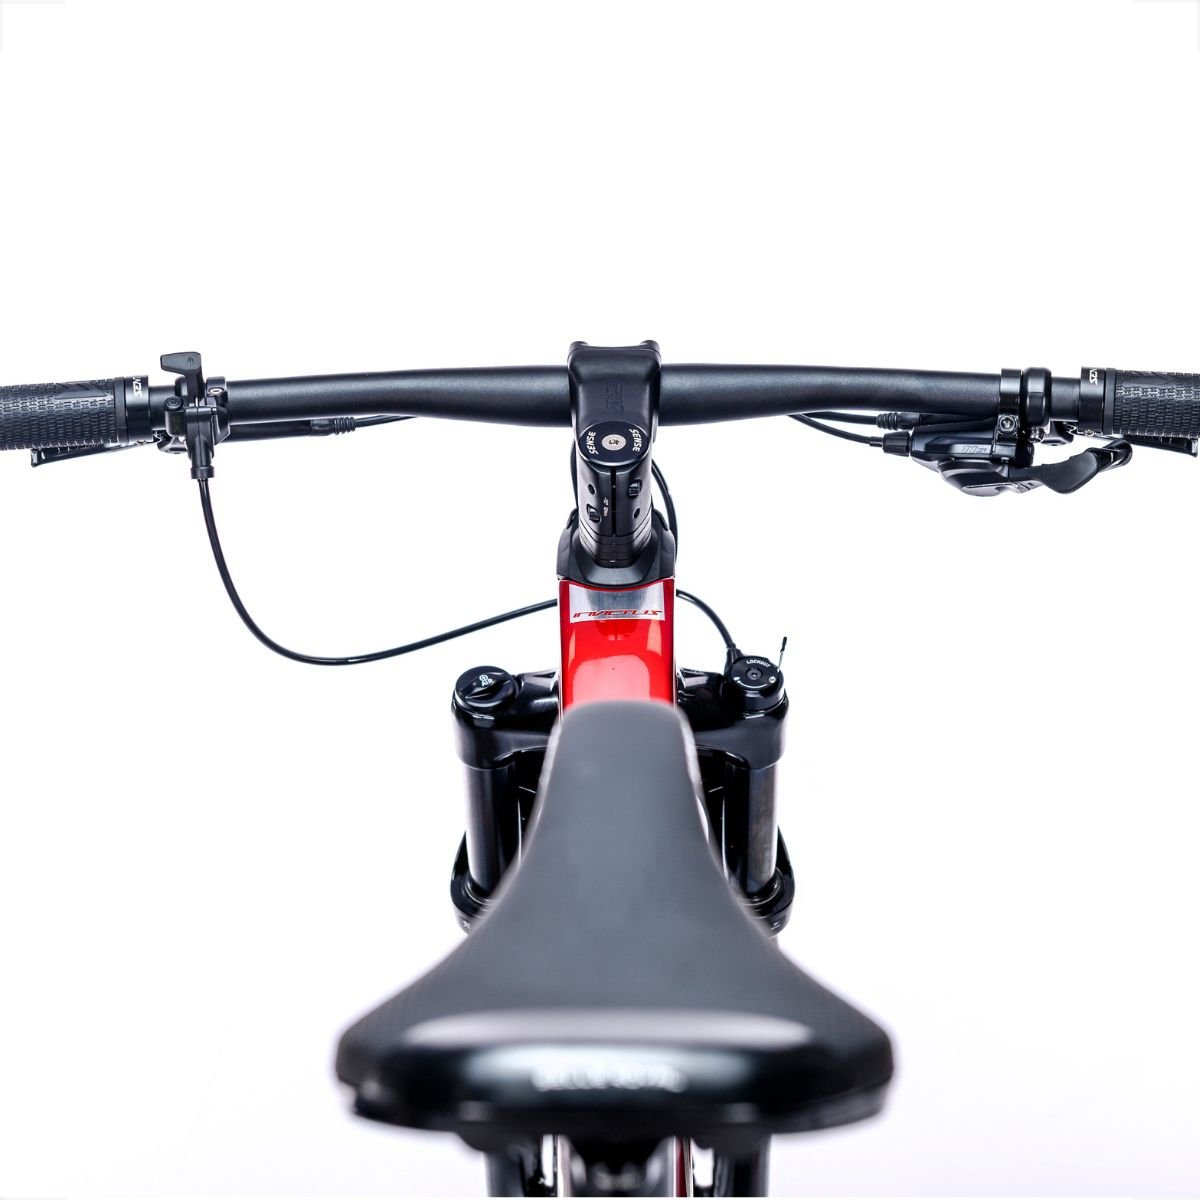 Bicicleta Full Sense Invictus Sport Carbono Shimano Cues:vermelho+preto/17 - 6